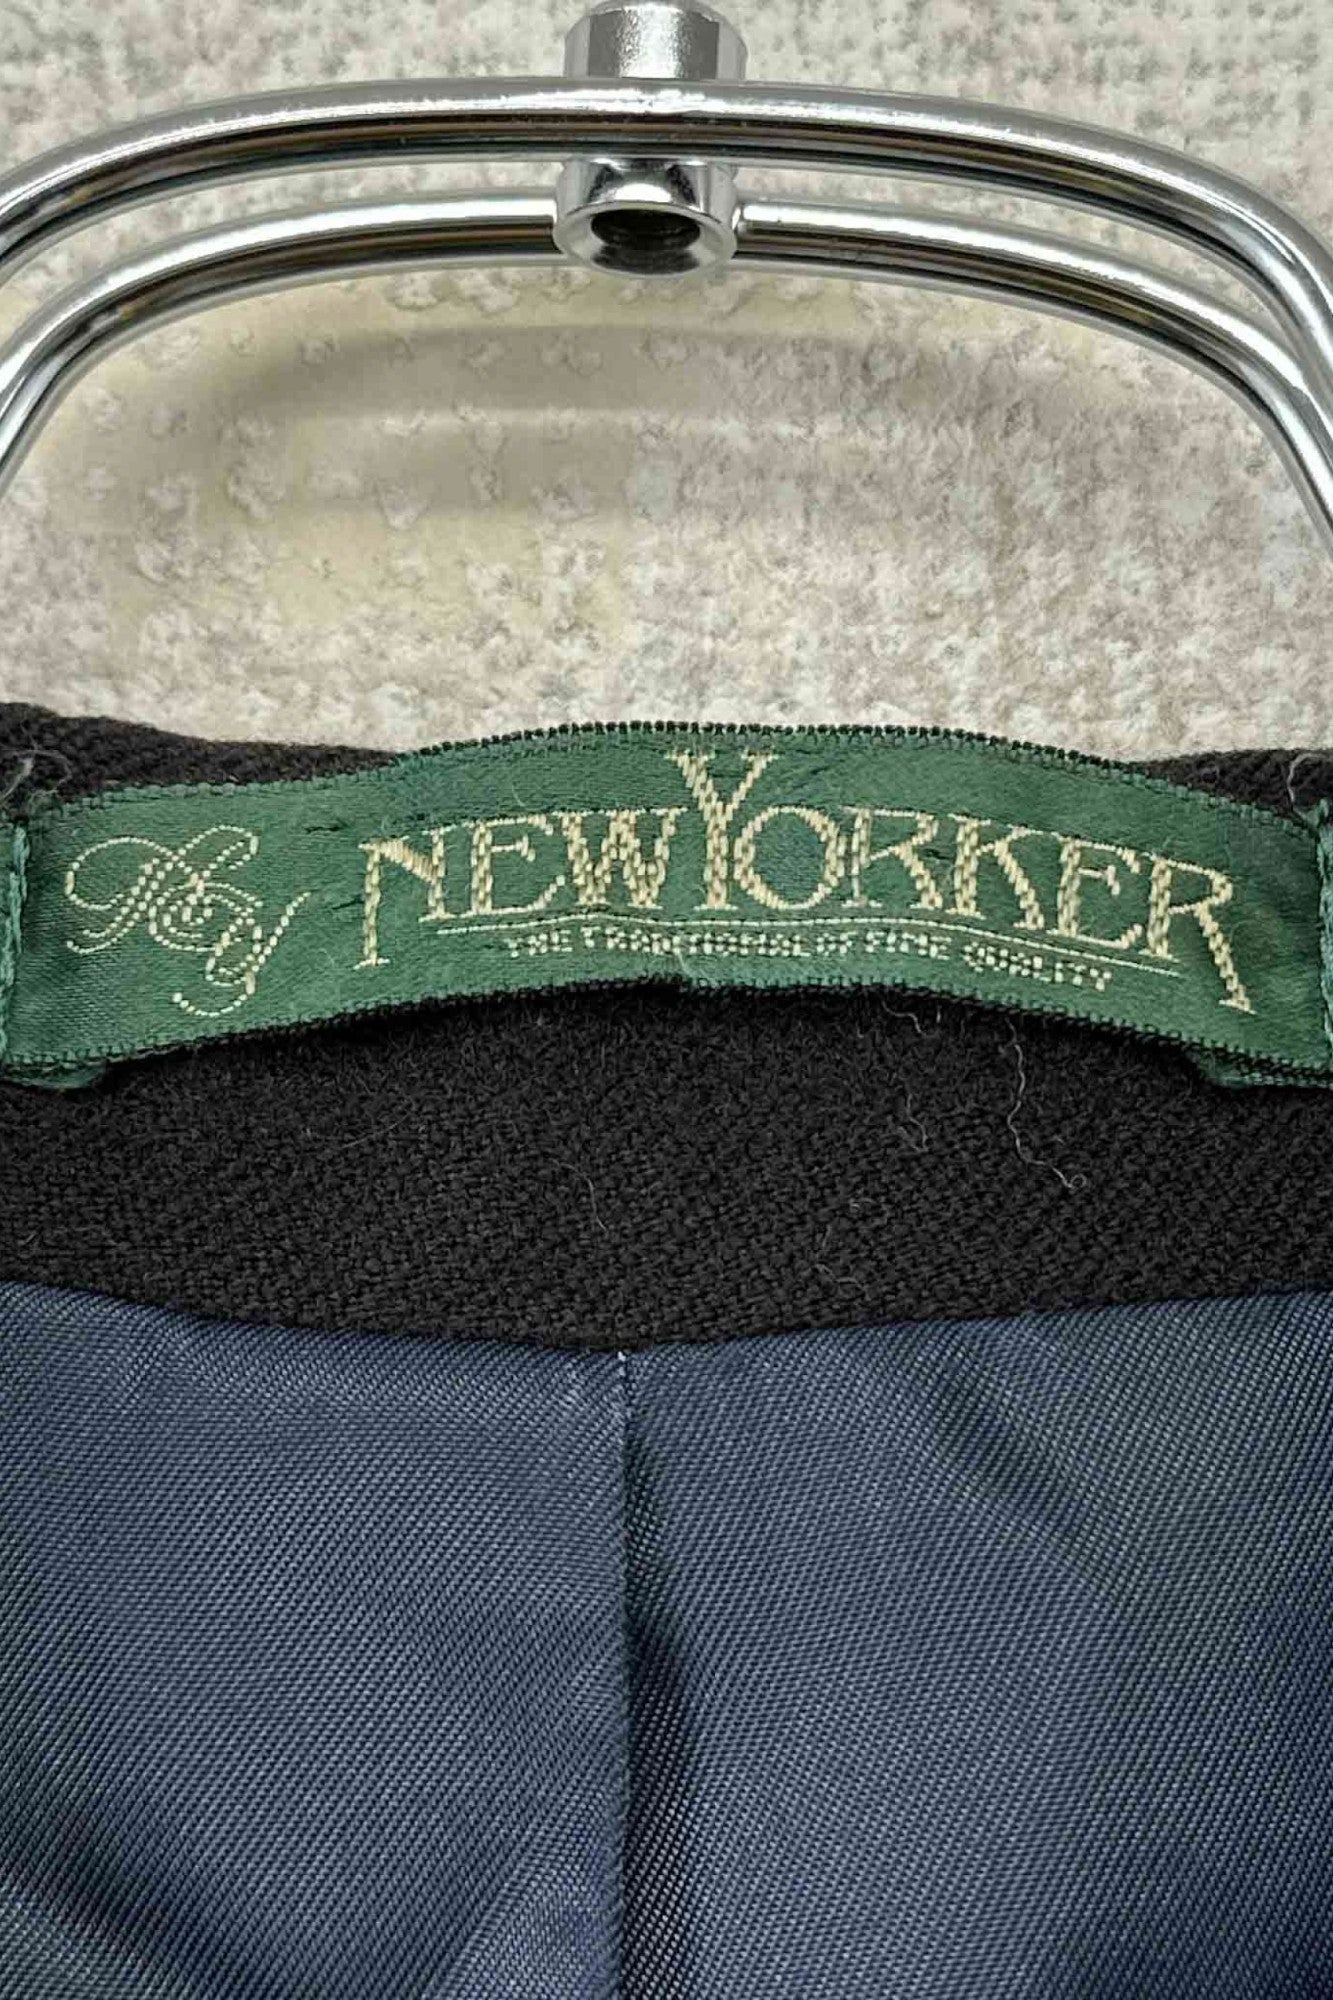 NEWYORKER navy jacket